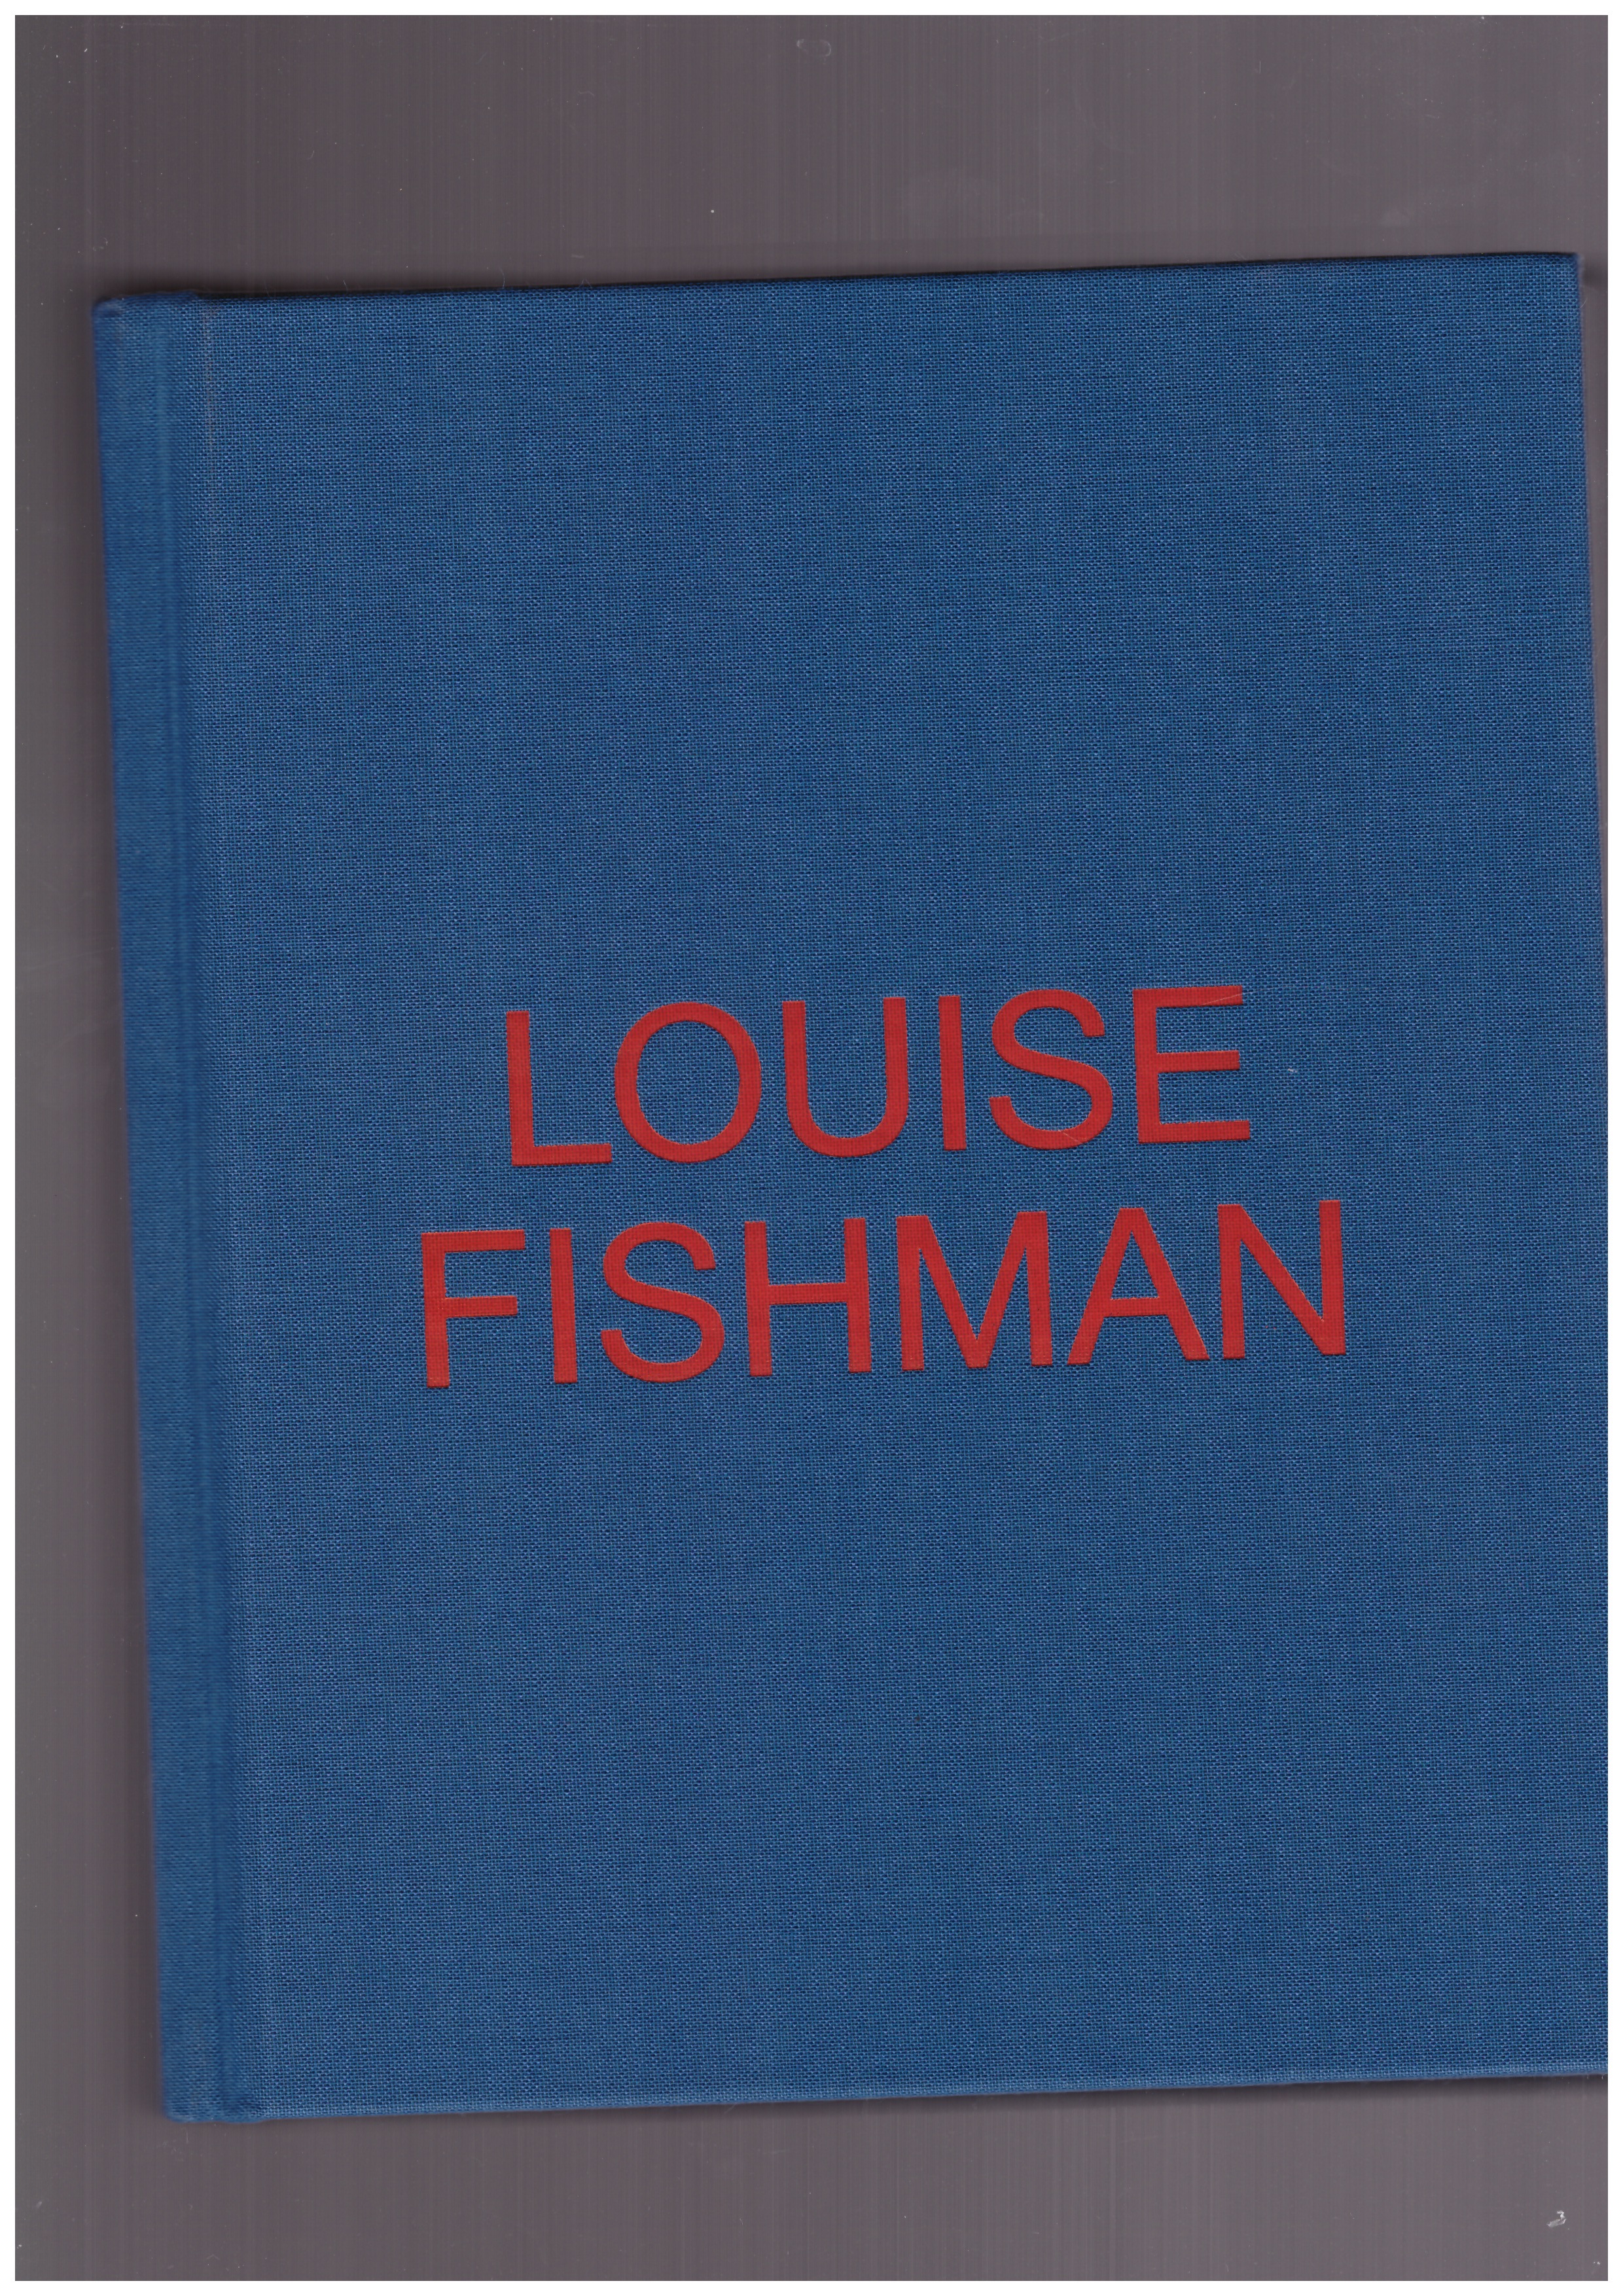 FISHMAN, Louise - Louise Fishman